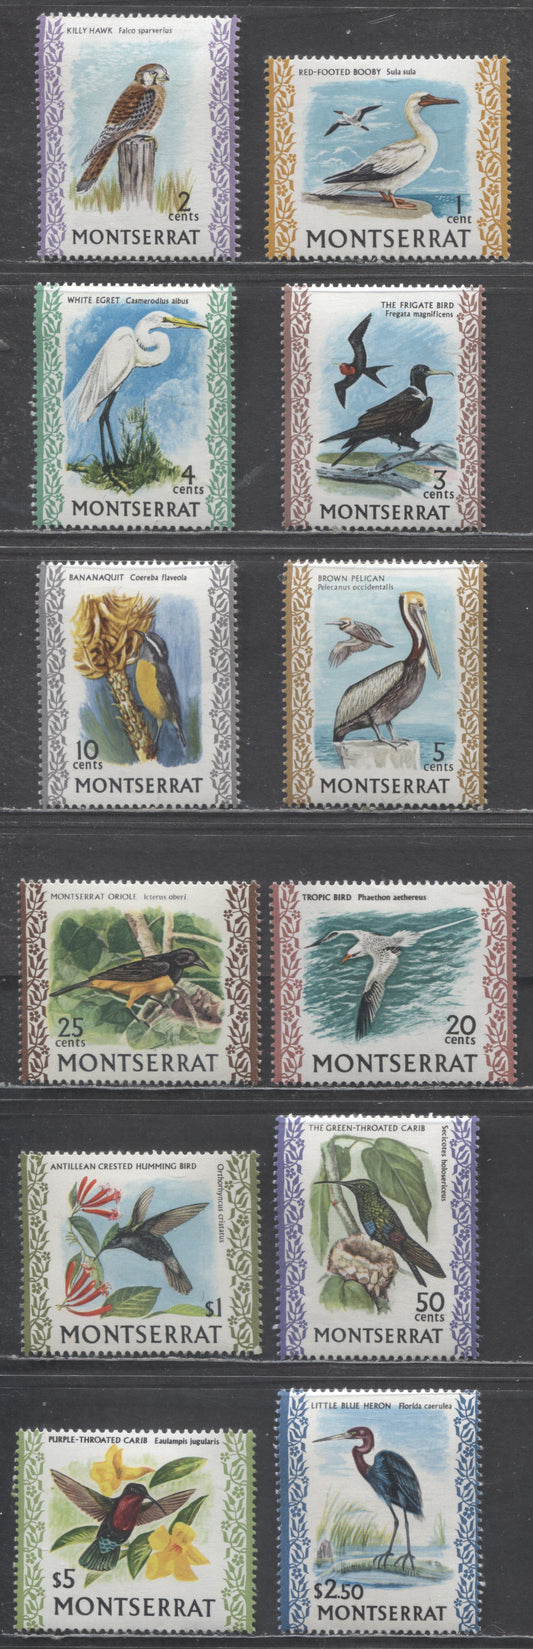 Lot 9 Montserrat SC#231/242 1970-1974 Bird Definitives, PVA & PVAD Gums, Block CA Wmk Upright & Sideways, 12 VFOG/NH Singles, Click on Listing to See ALL Pictures, Estimated Value $14